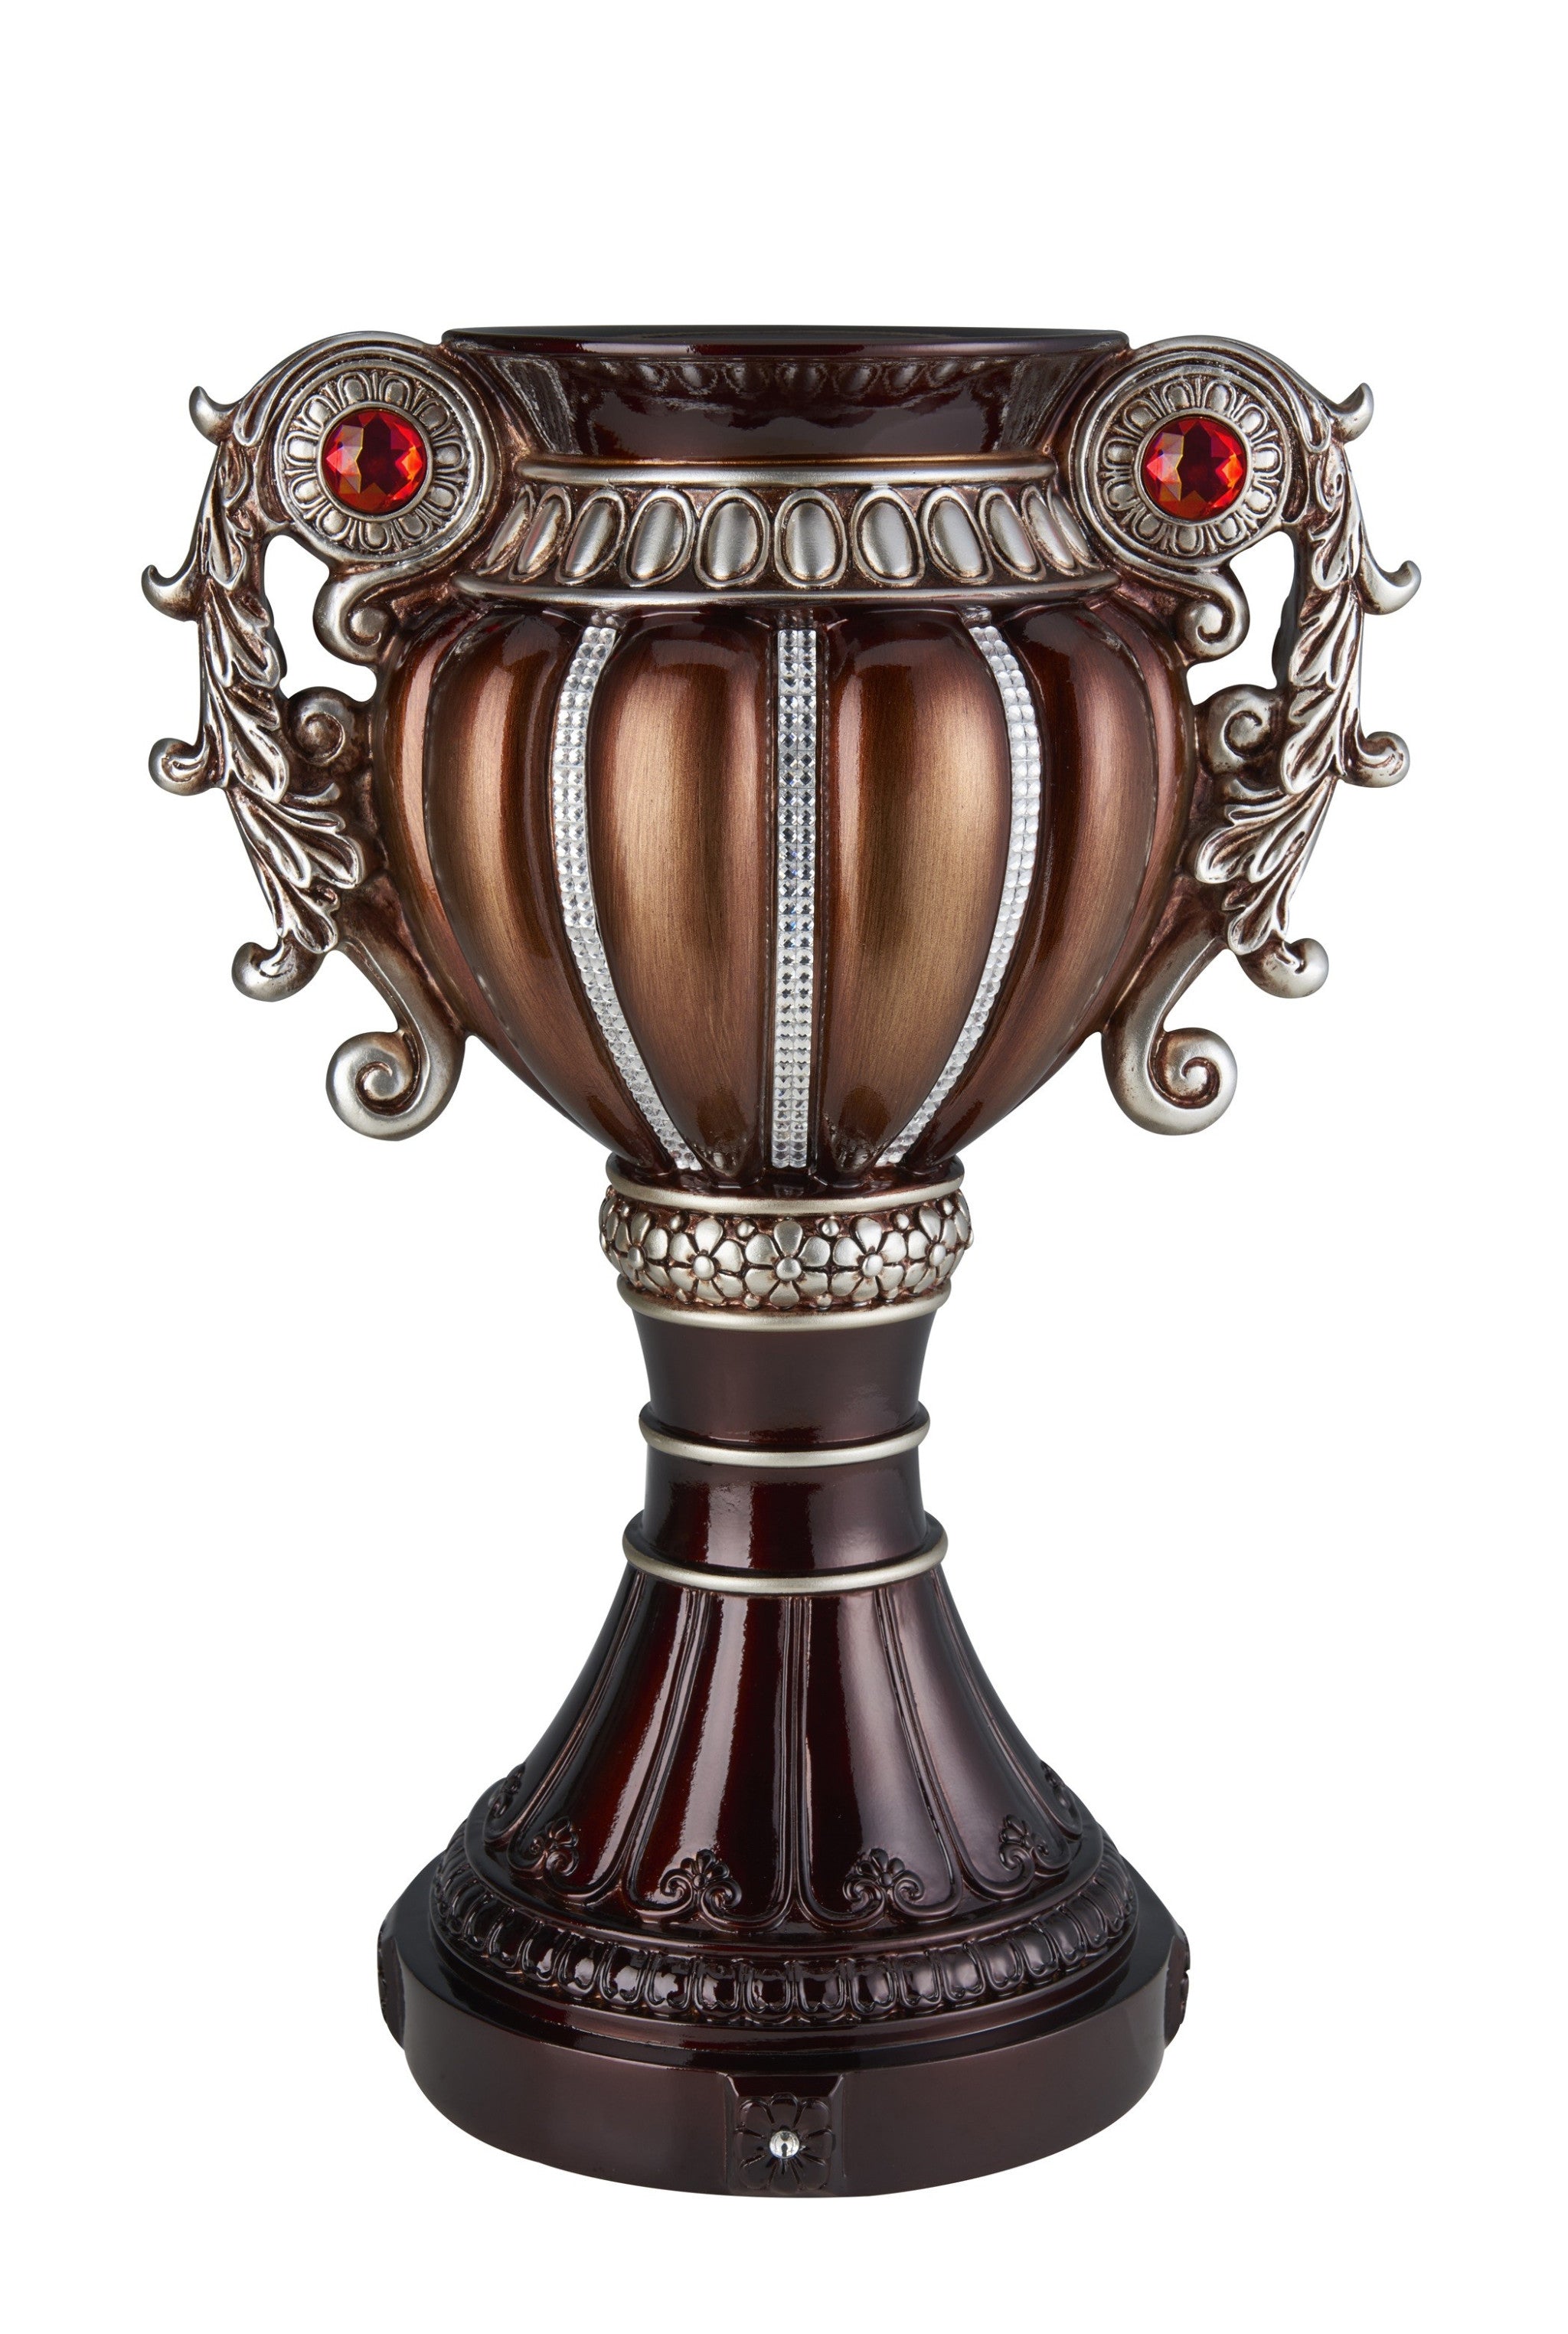 18" Brown Bronze and Silver Polyresin Urn Vase